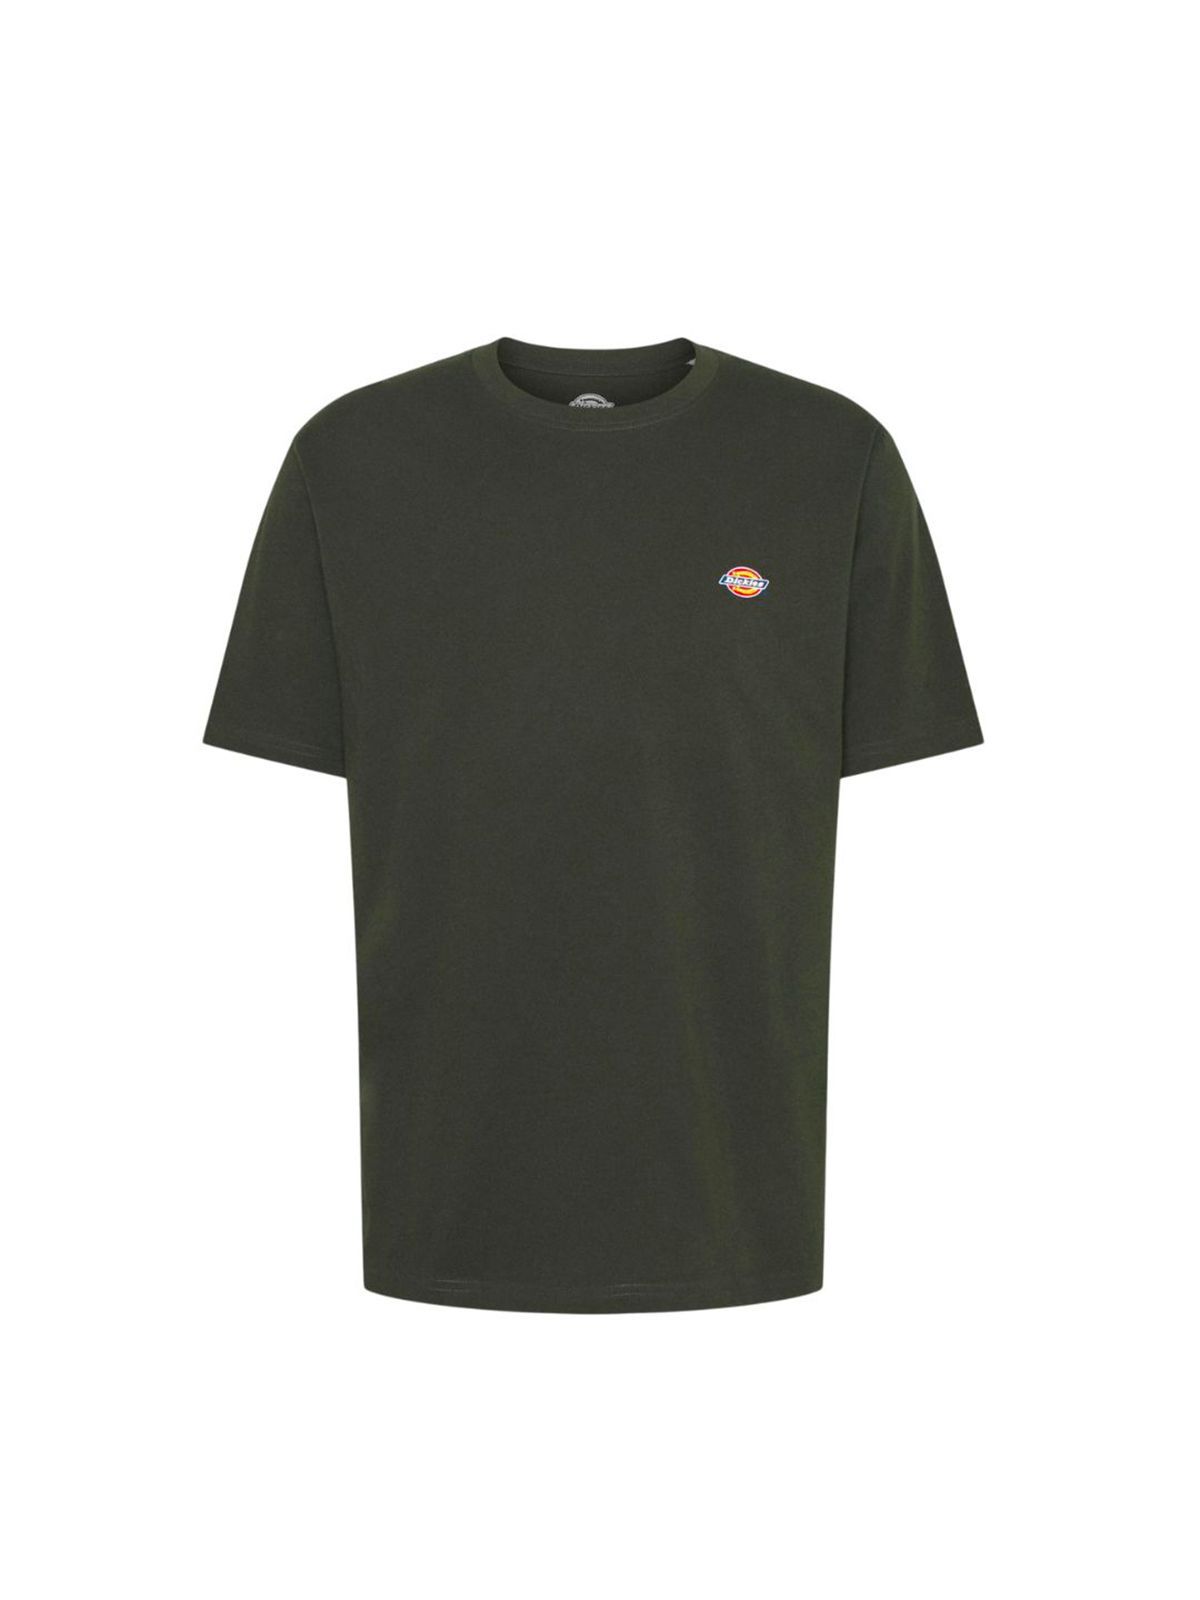 Ss Mapletton Dickies Olive T-shirt | T-shirt Mapleton Ss - T-shirt ModeSens Green